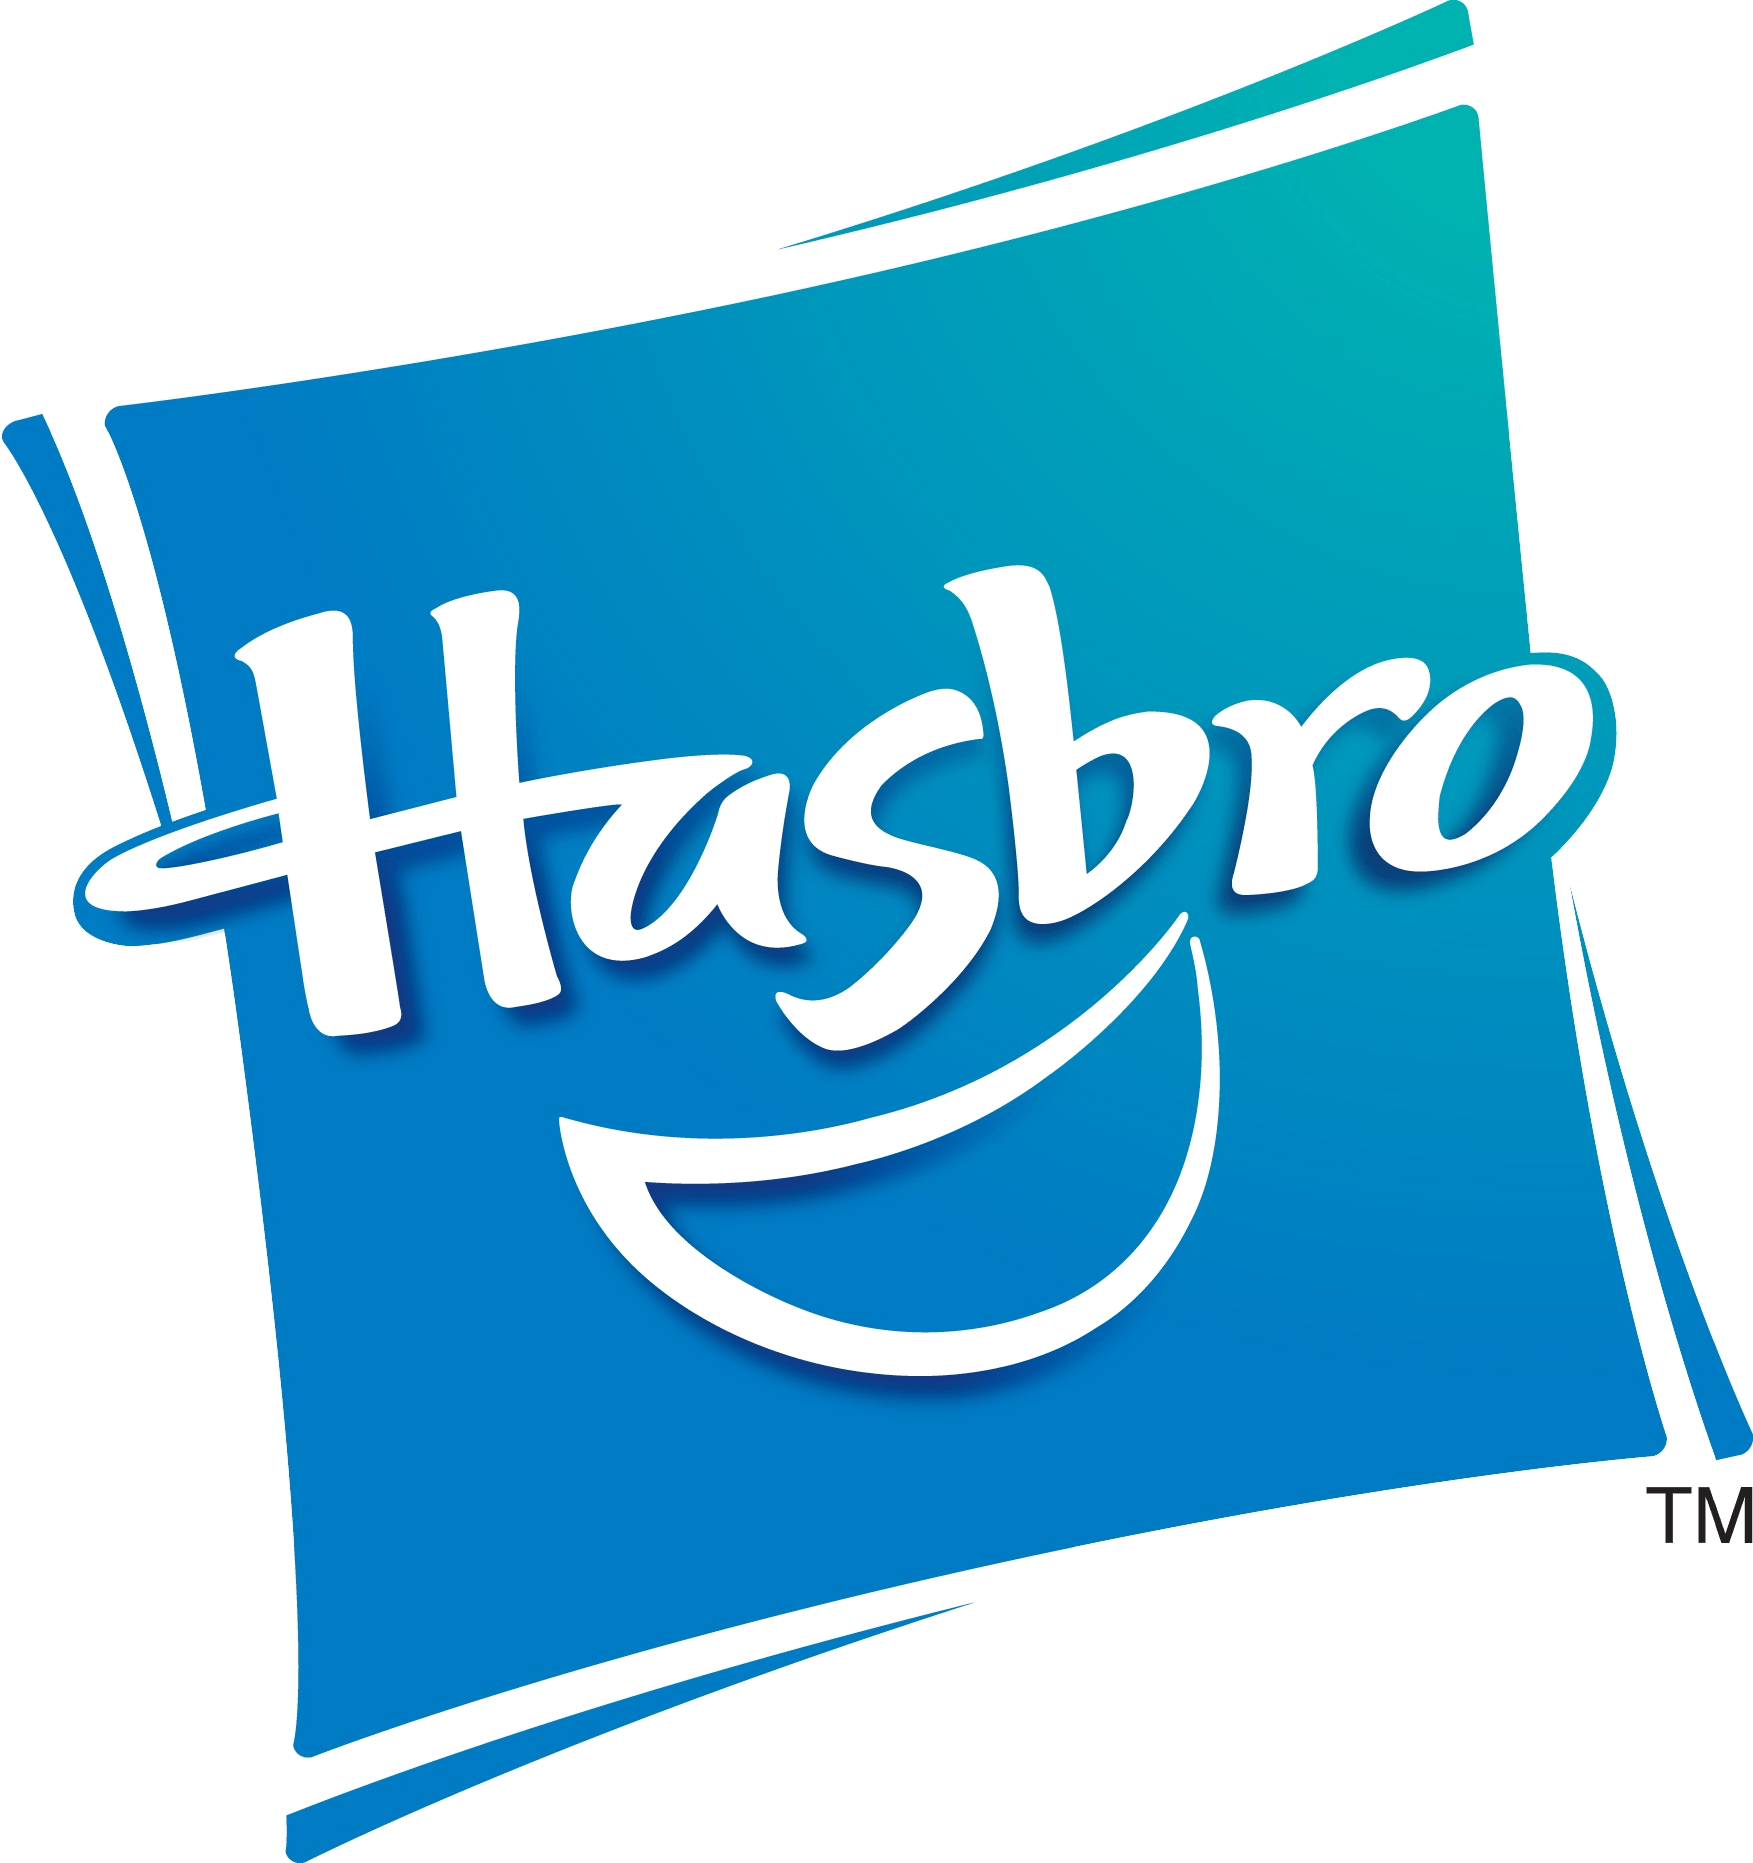 Hasbro Brand Logo